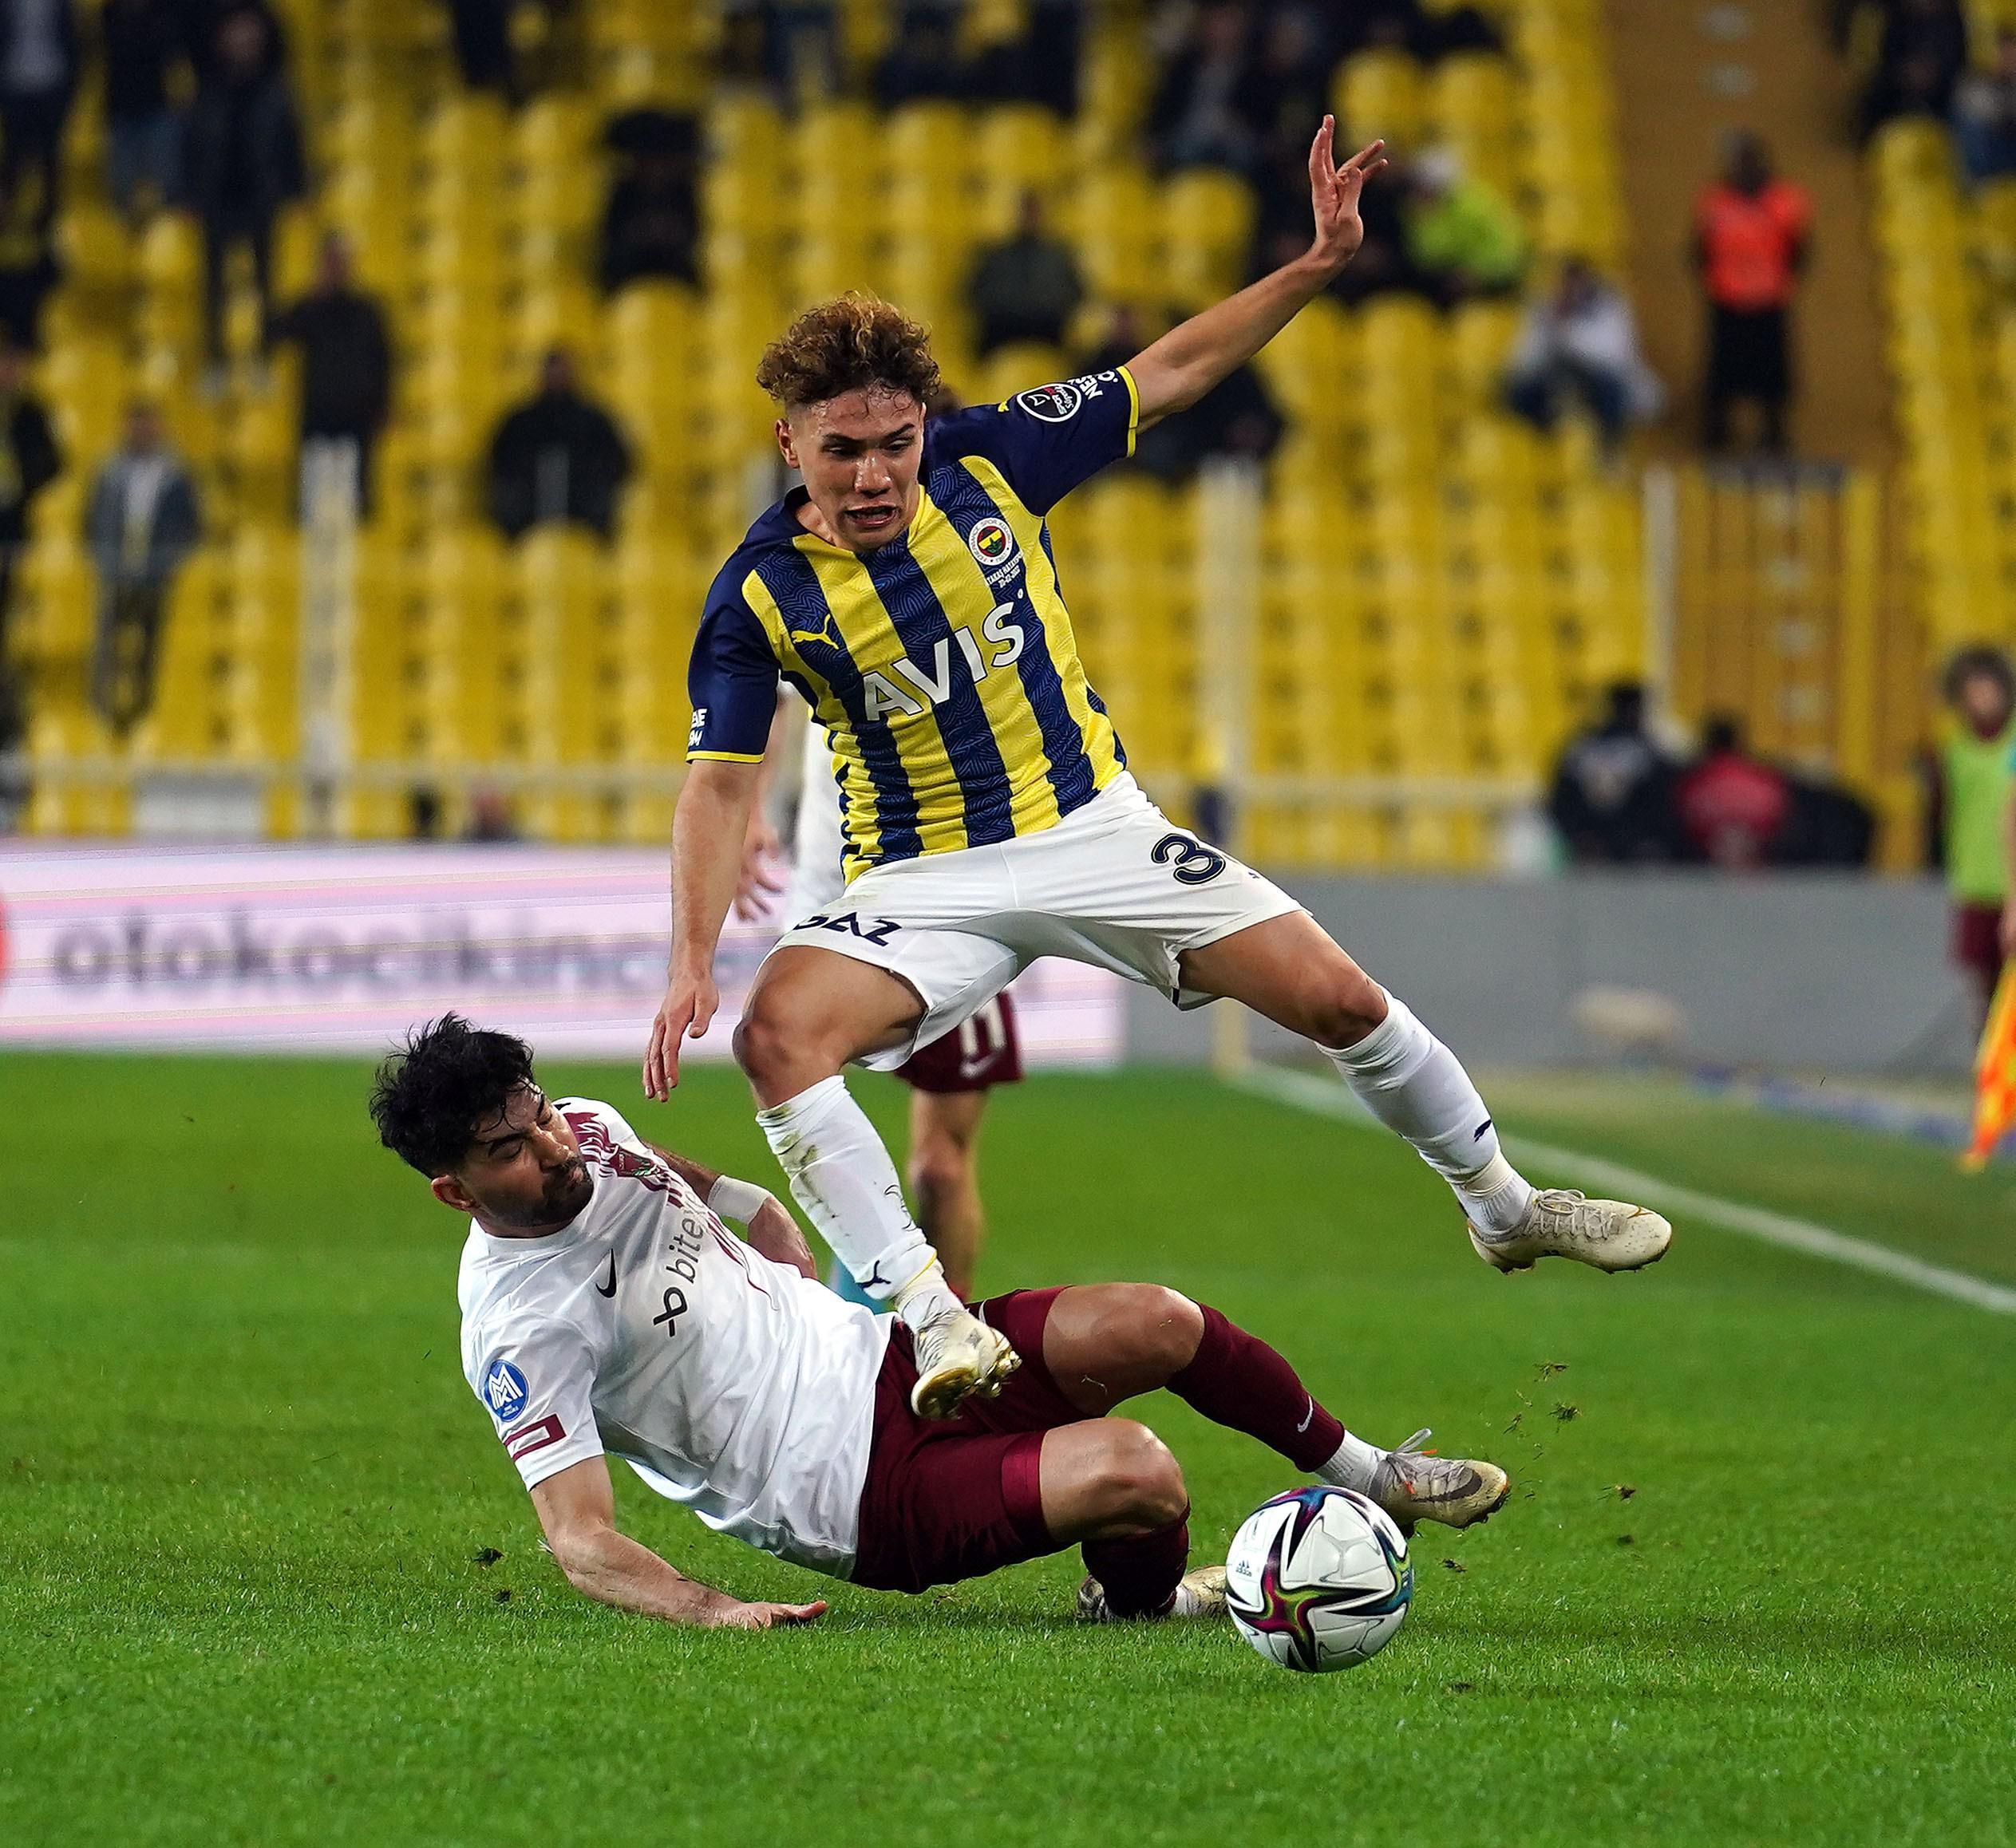 (ÖZET) Fenerbahçe - Hatayspor maç sonucu: 2-0